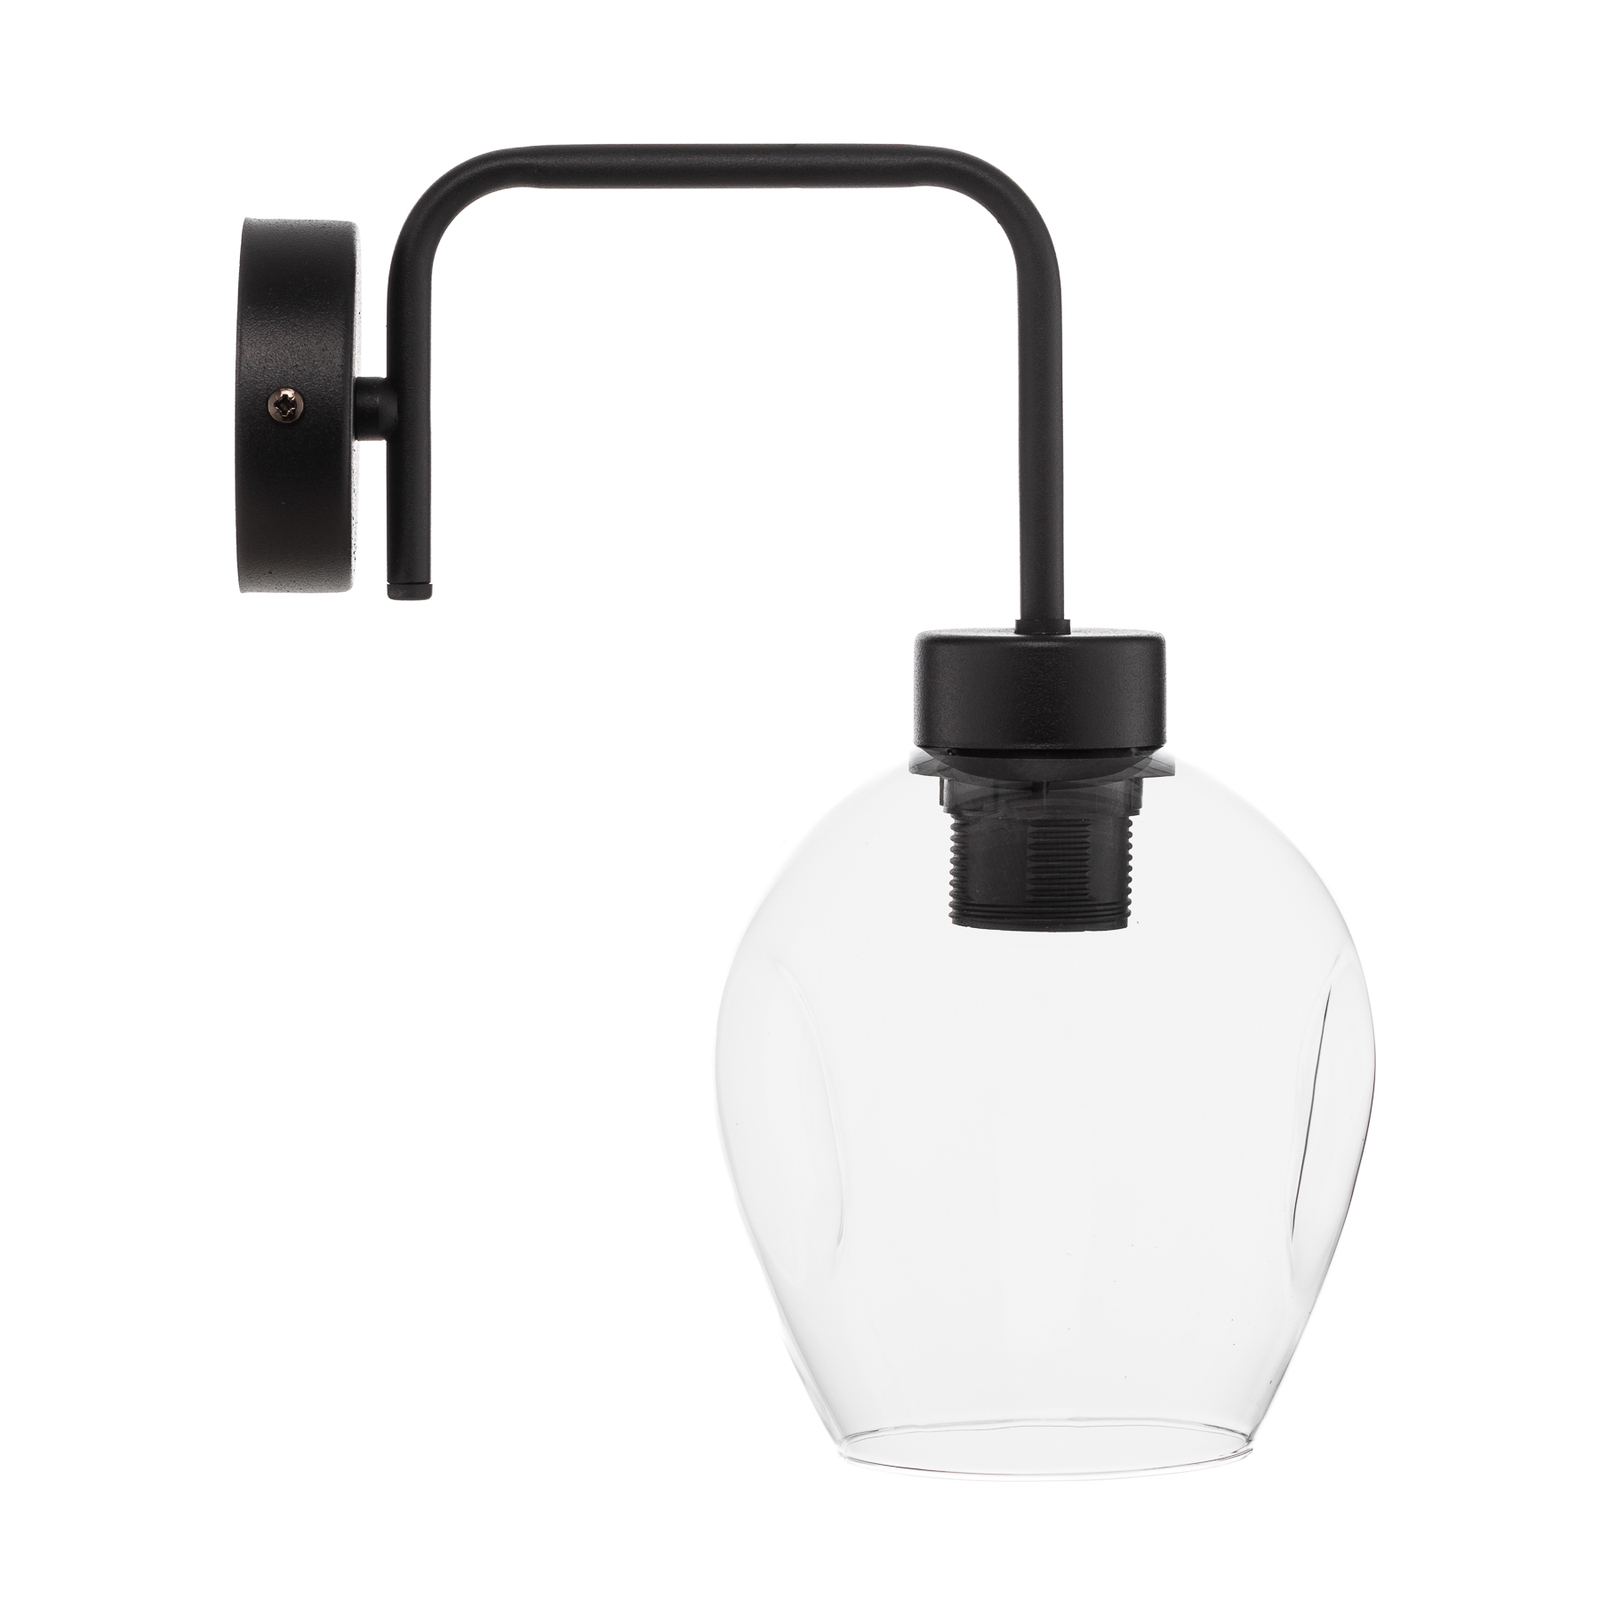 Lukka wall light, one-bulb, black/clear